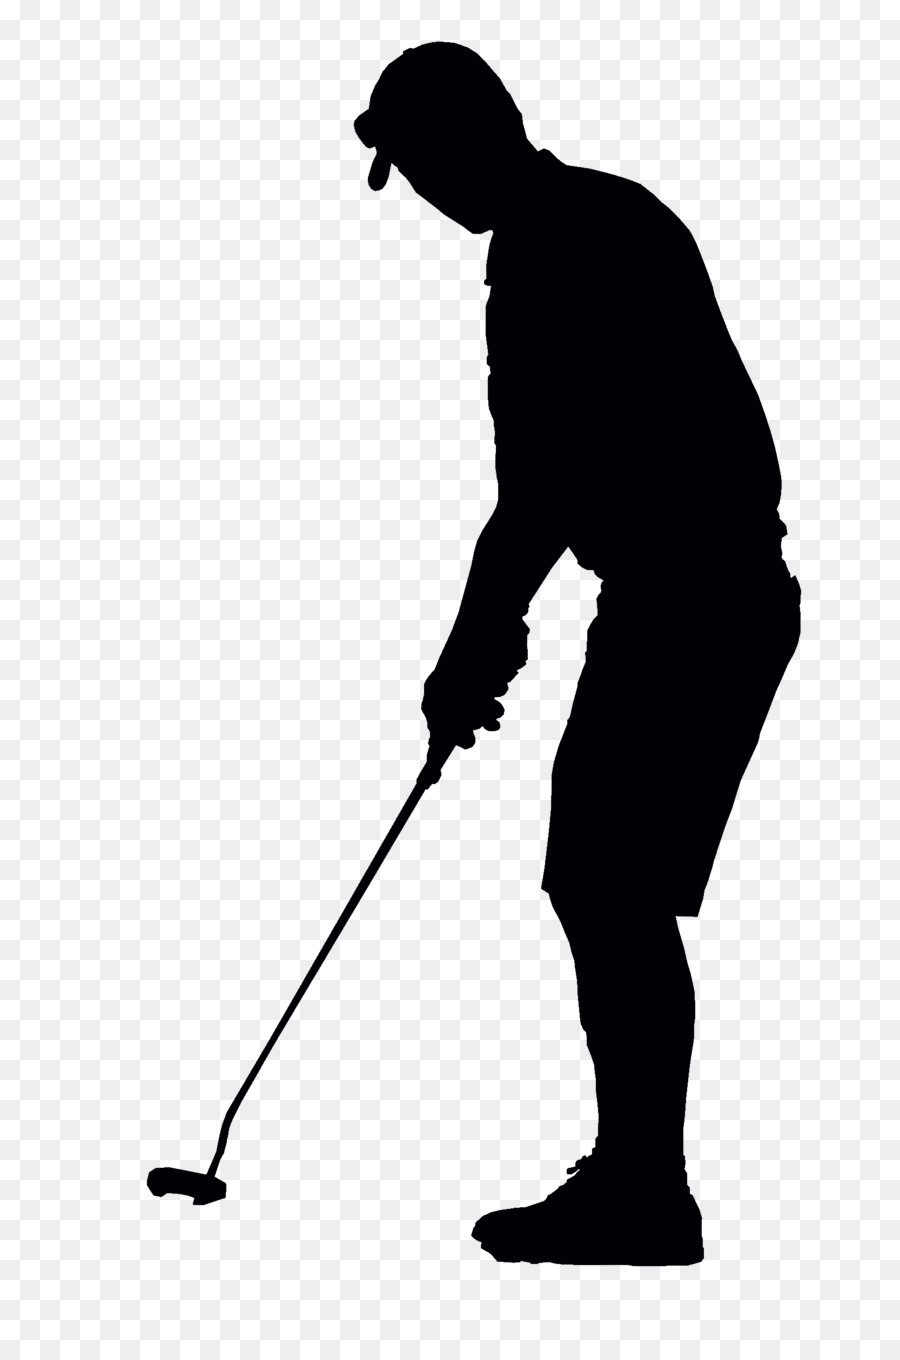 Golf club Golf ball Clip art - OMG Cliparts png download - 1666*2500 - Free Transparent Golf png Download.